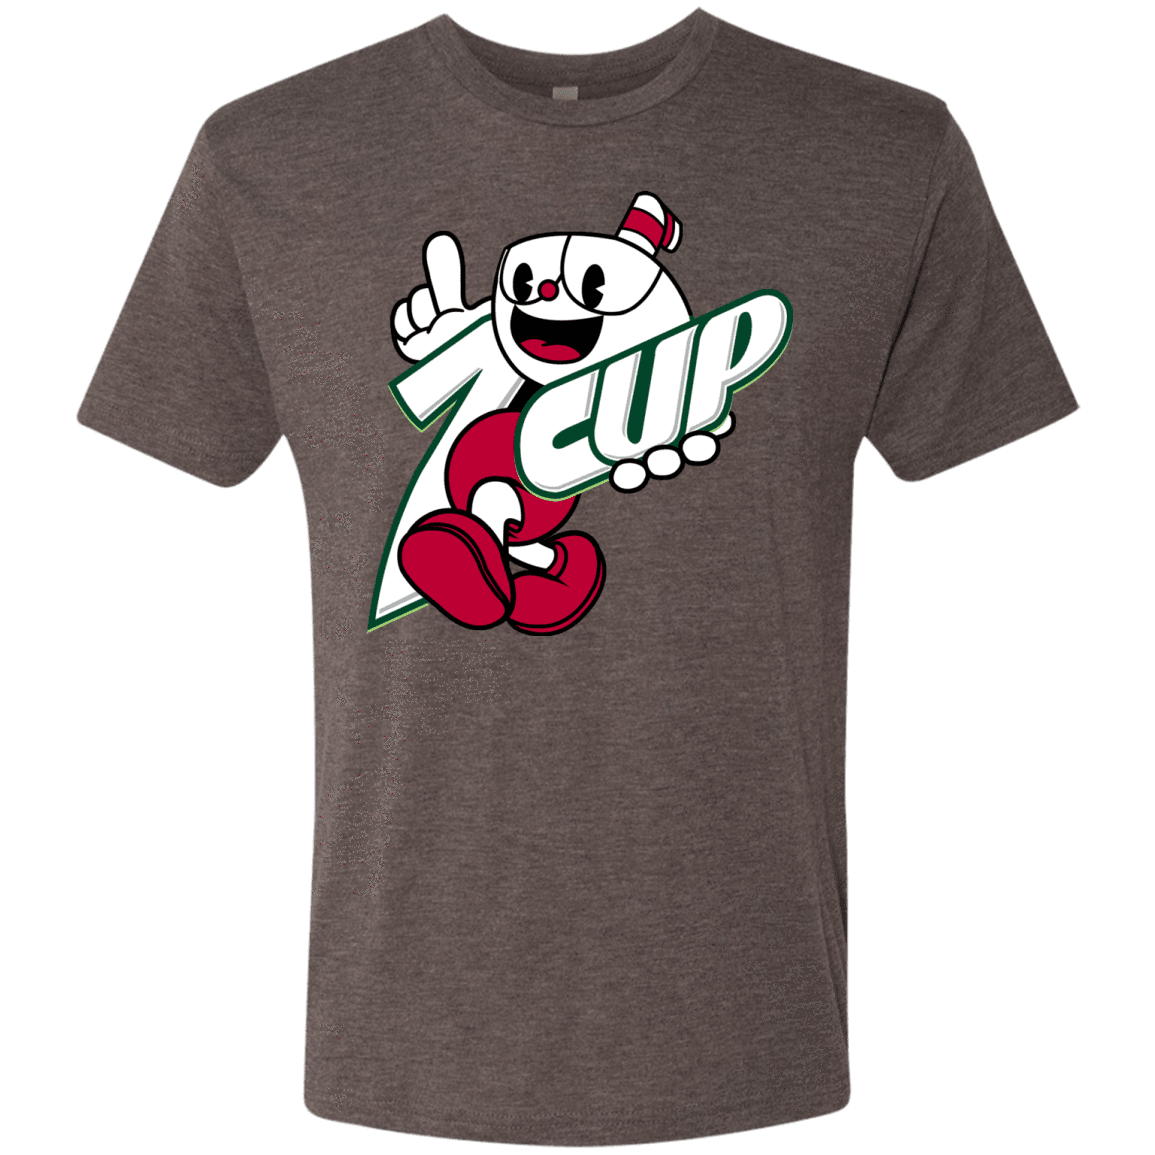 1cup Men's Triblend T-Shirt